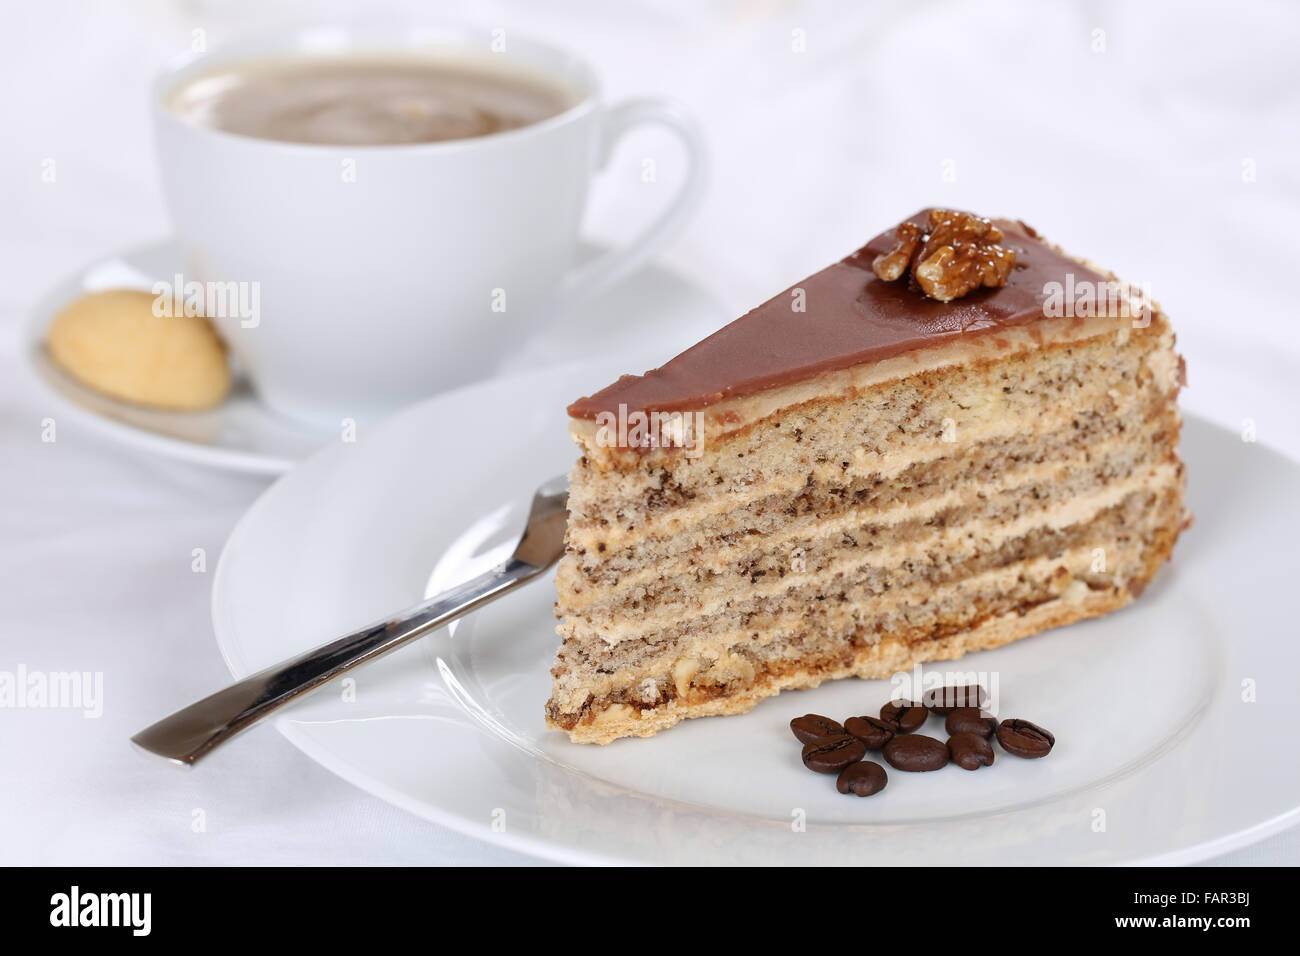 Coffee and cake tart dessert sweet pastry Stock Photo